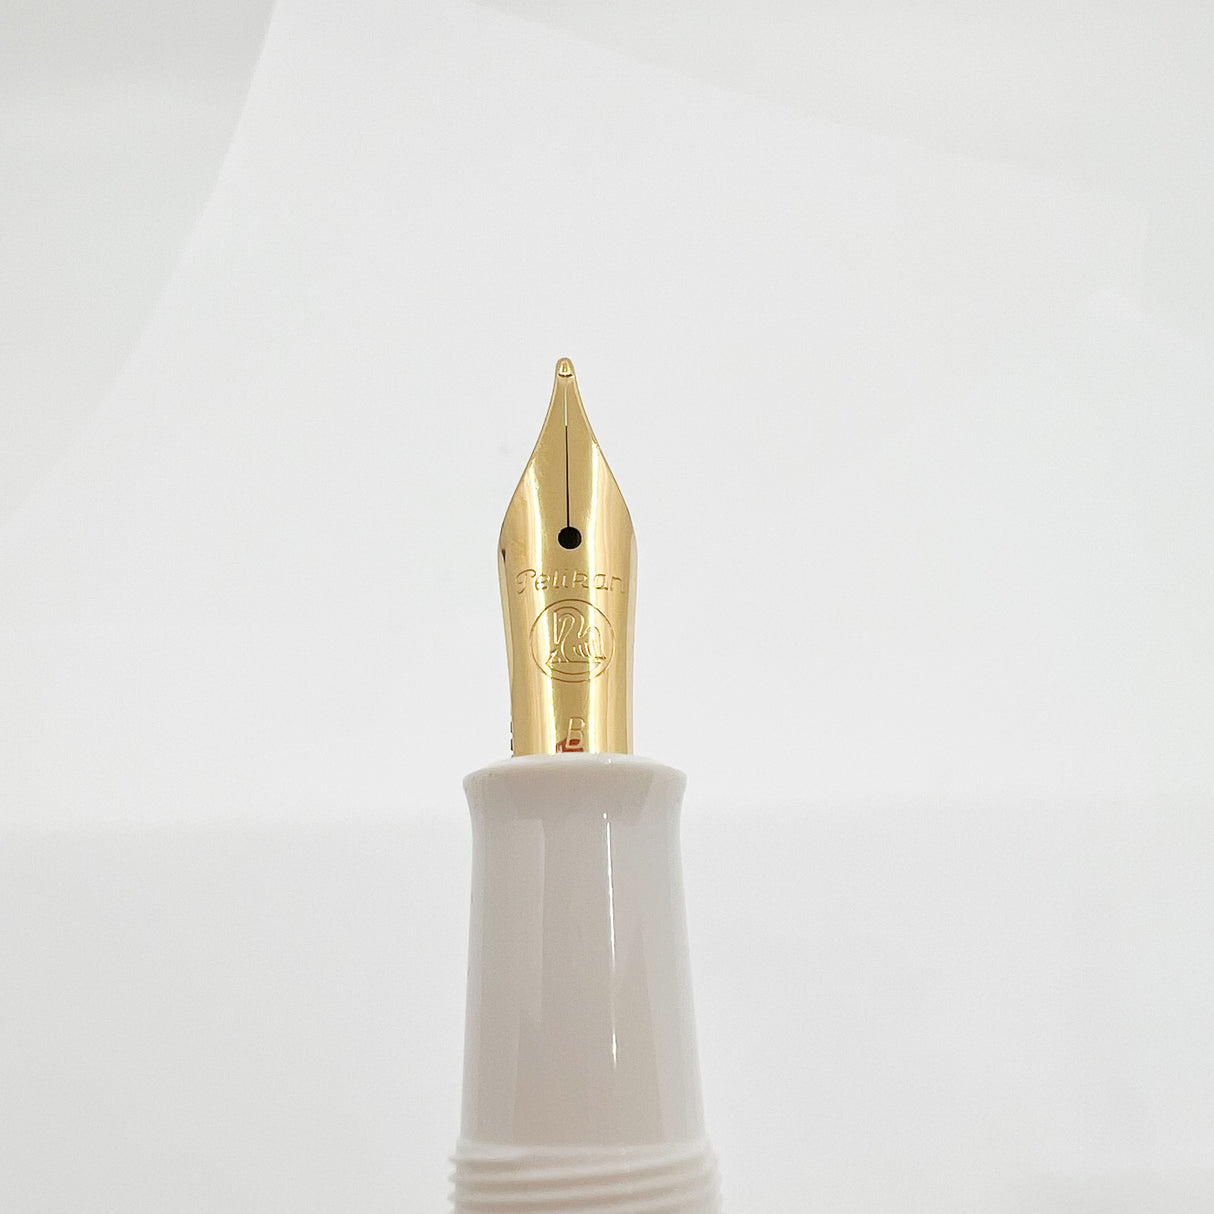 Pelikan M200 White-Gold Marbled Fountain Pen